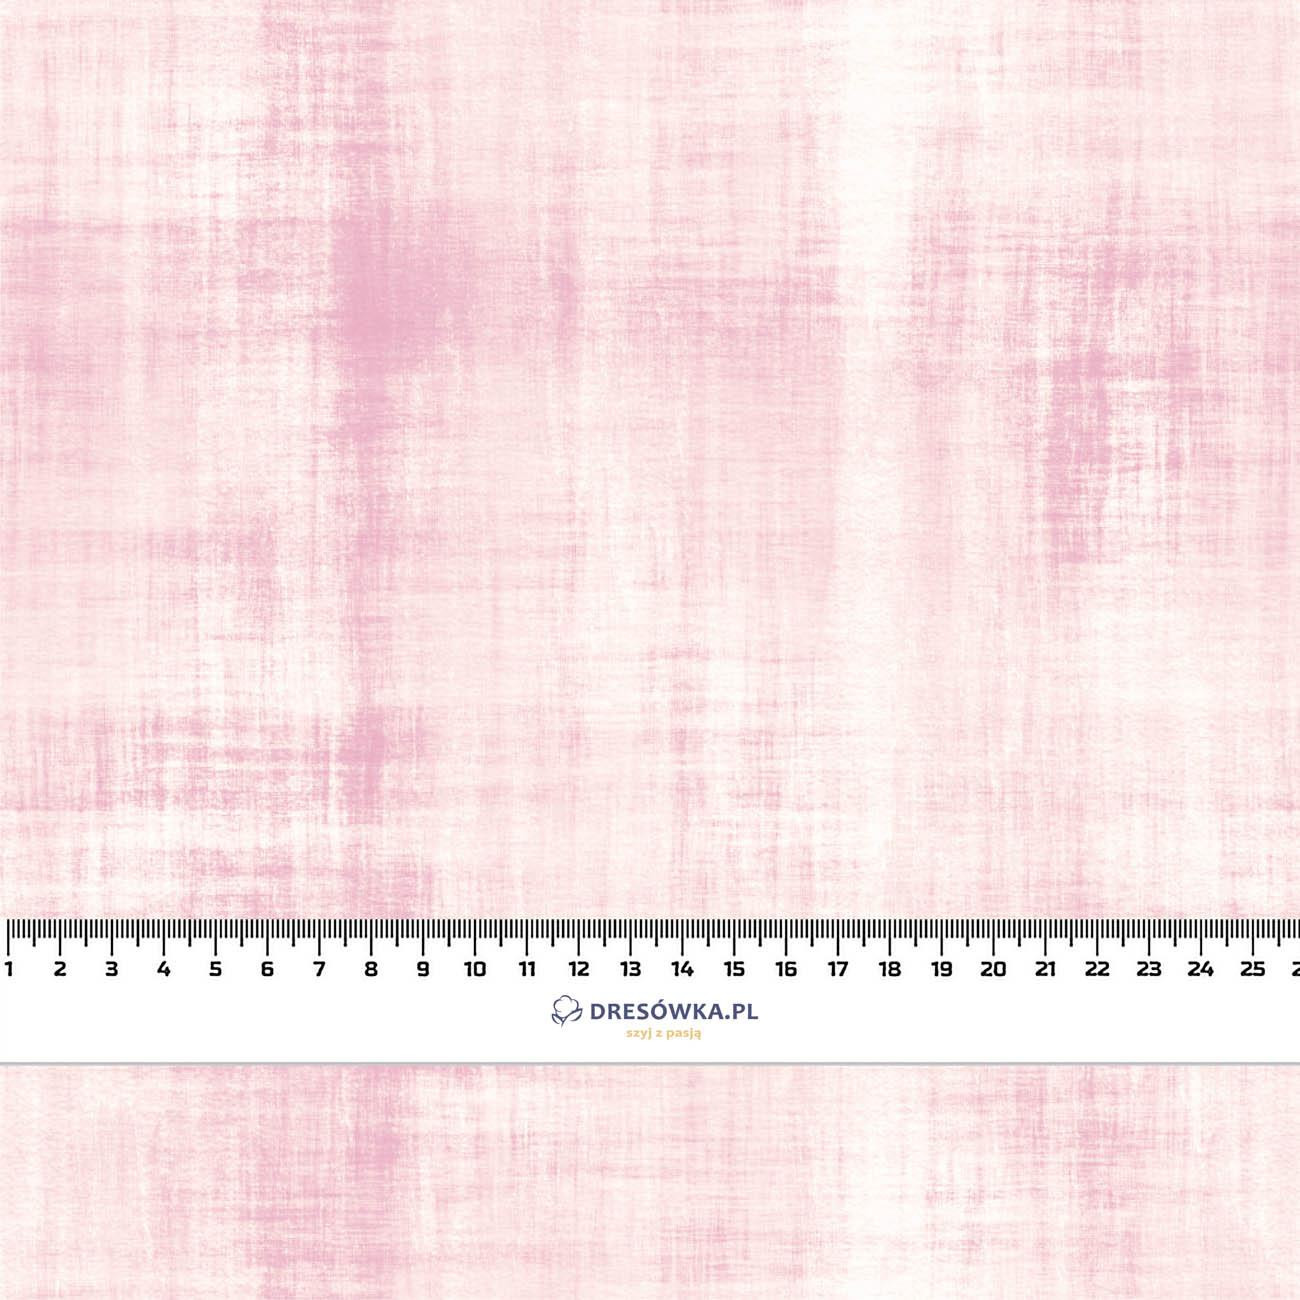 ACID WASH PAT. 2 (pale pink) - Cotton woven fabric